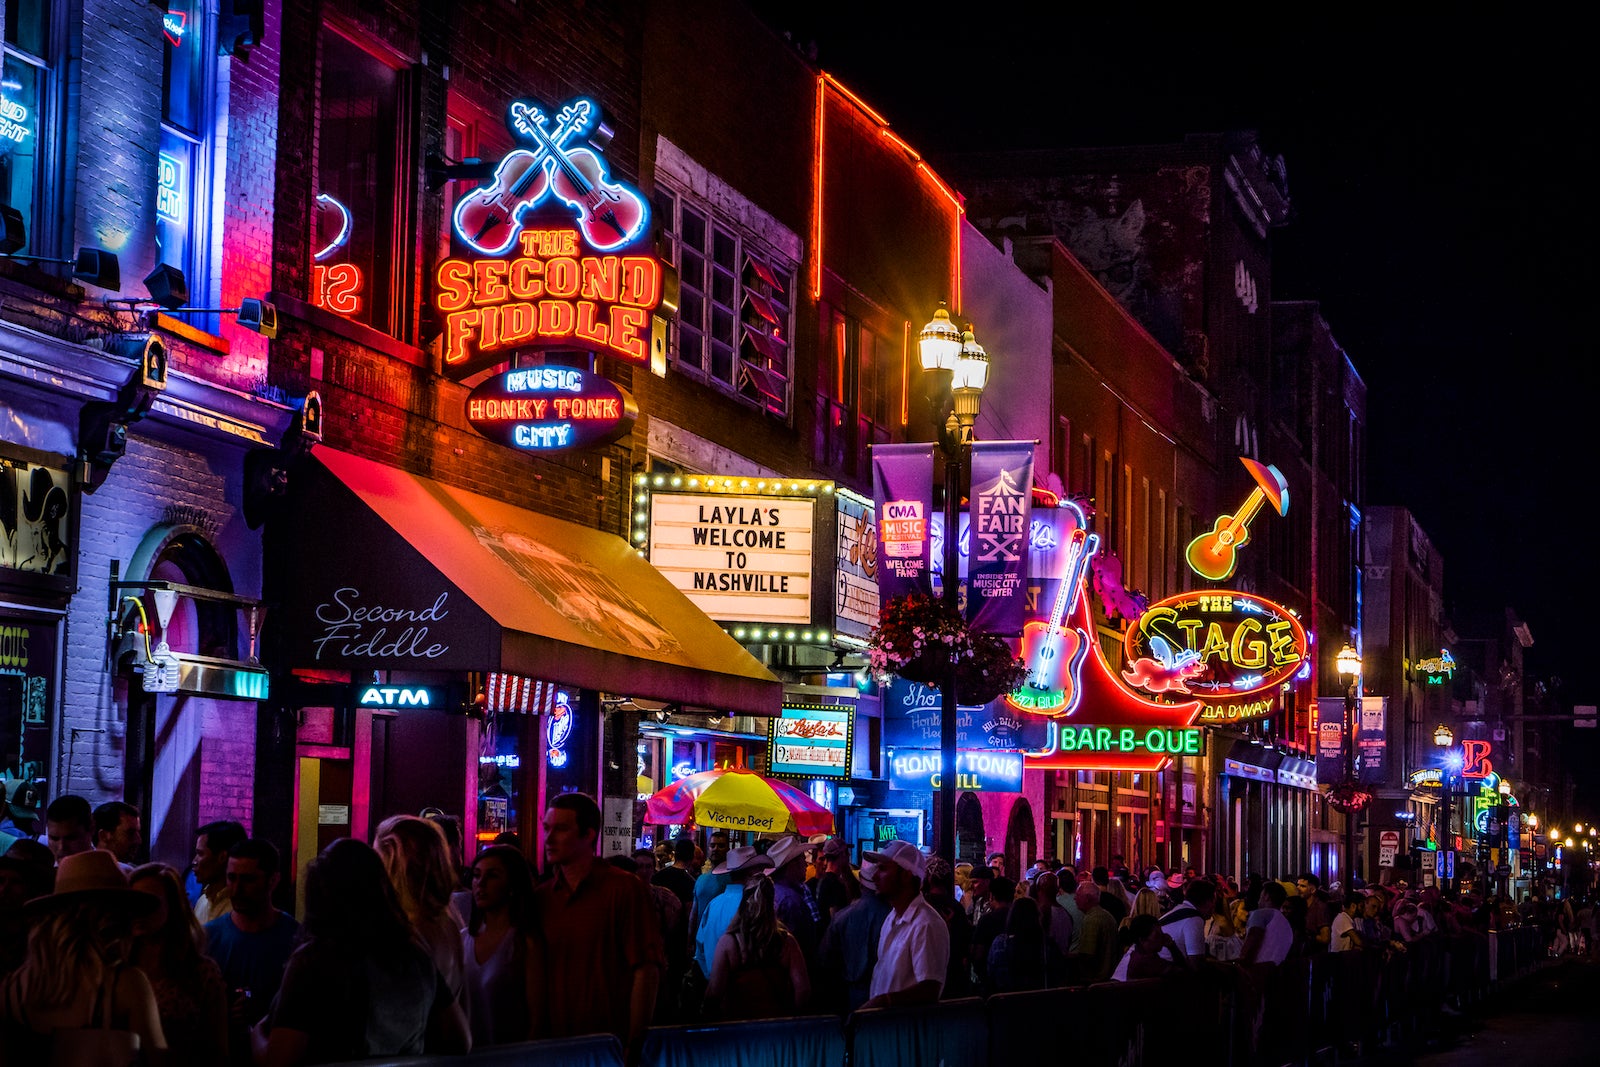 neon lights and signs on Nashville street